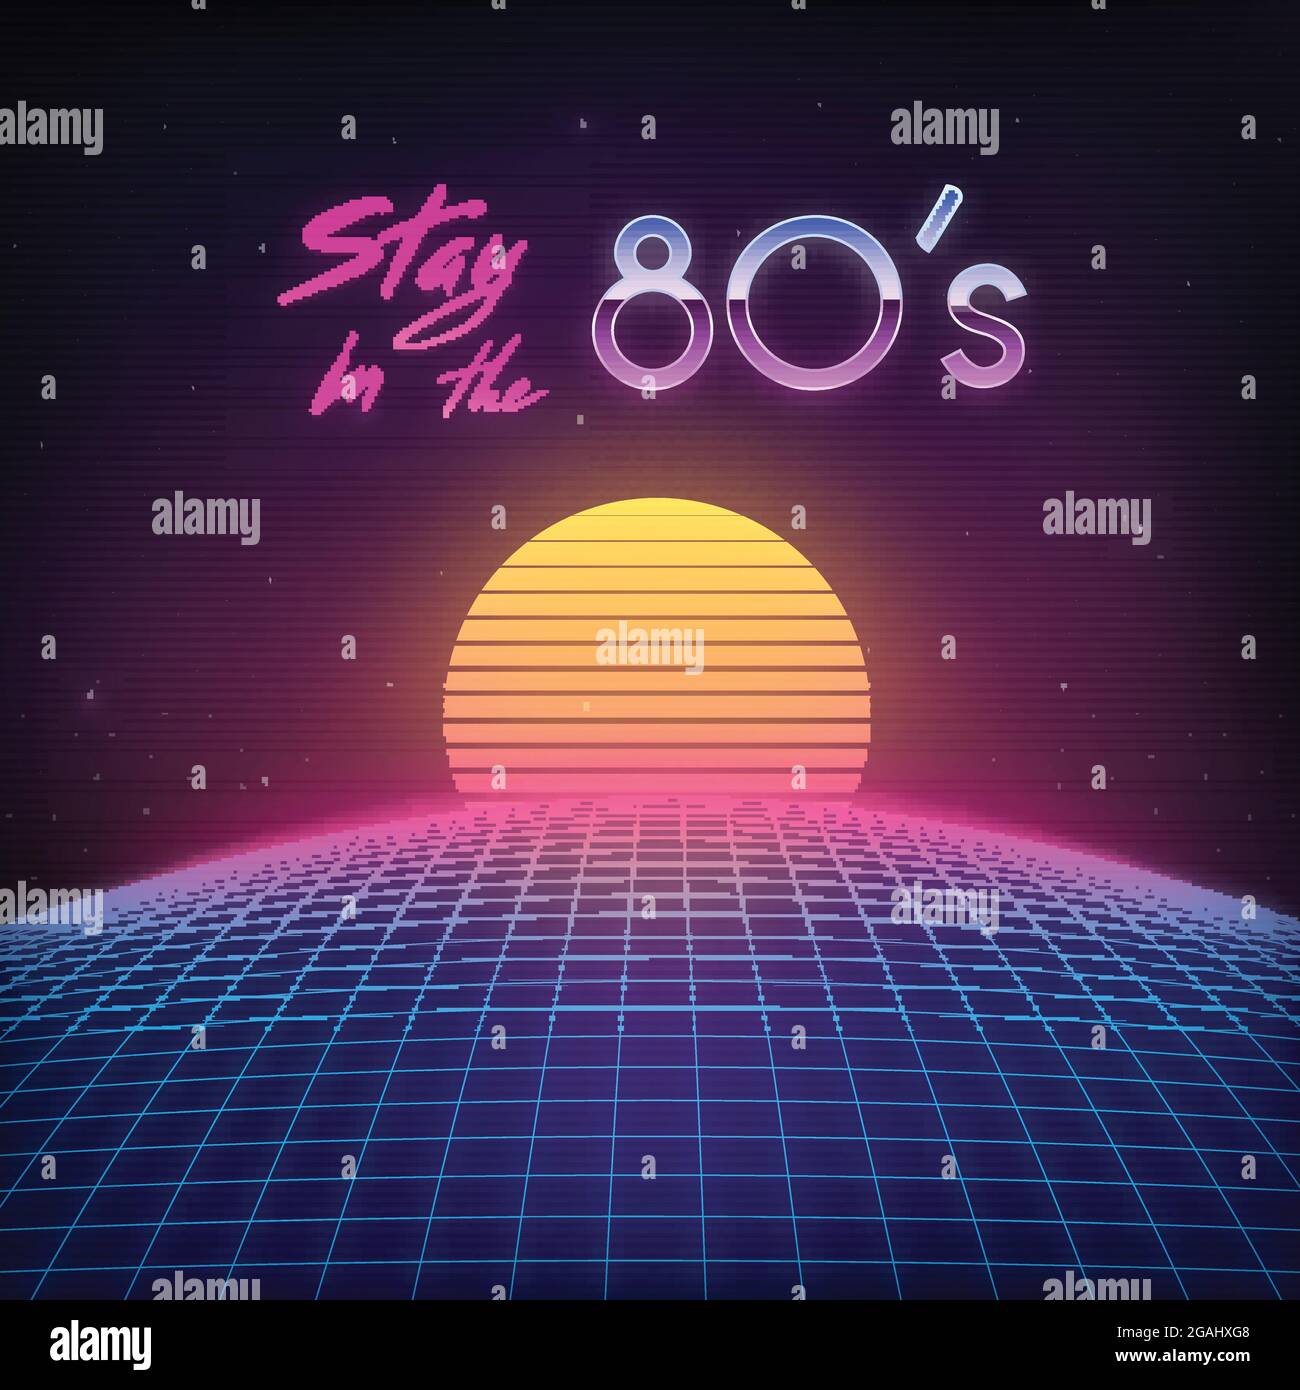 Retro Cover 1980s. Digital planet, space and sun. Laser grid on terrain in cyber world. Retro futuristic background 80s style. Stock Vector